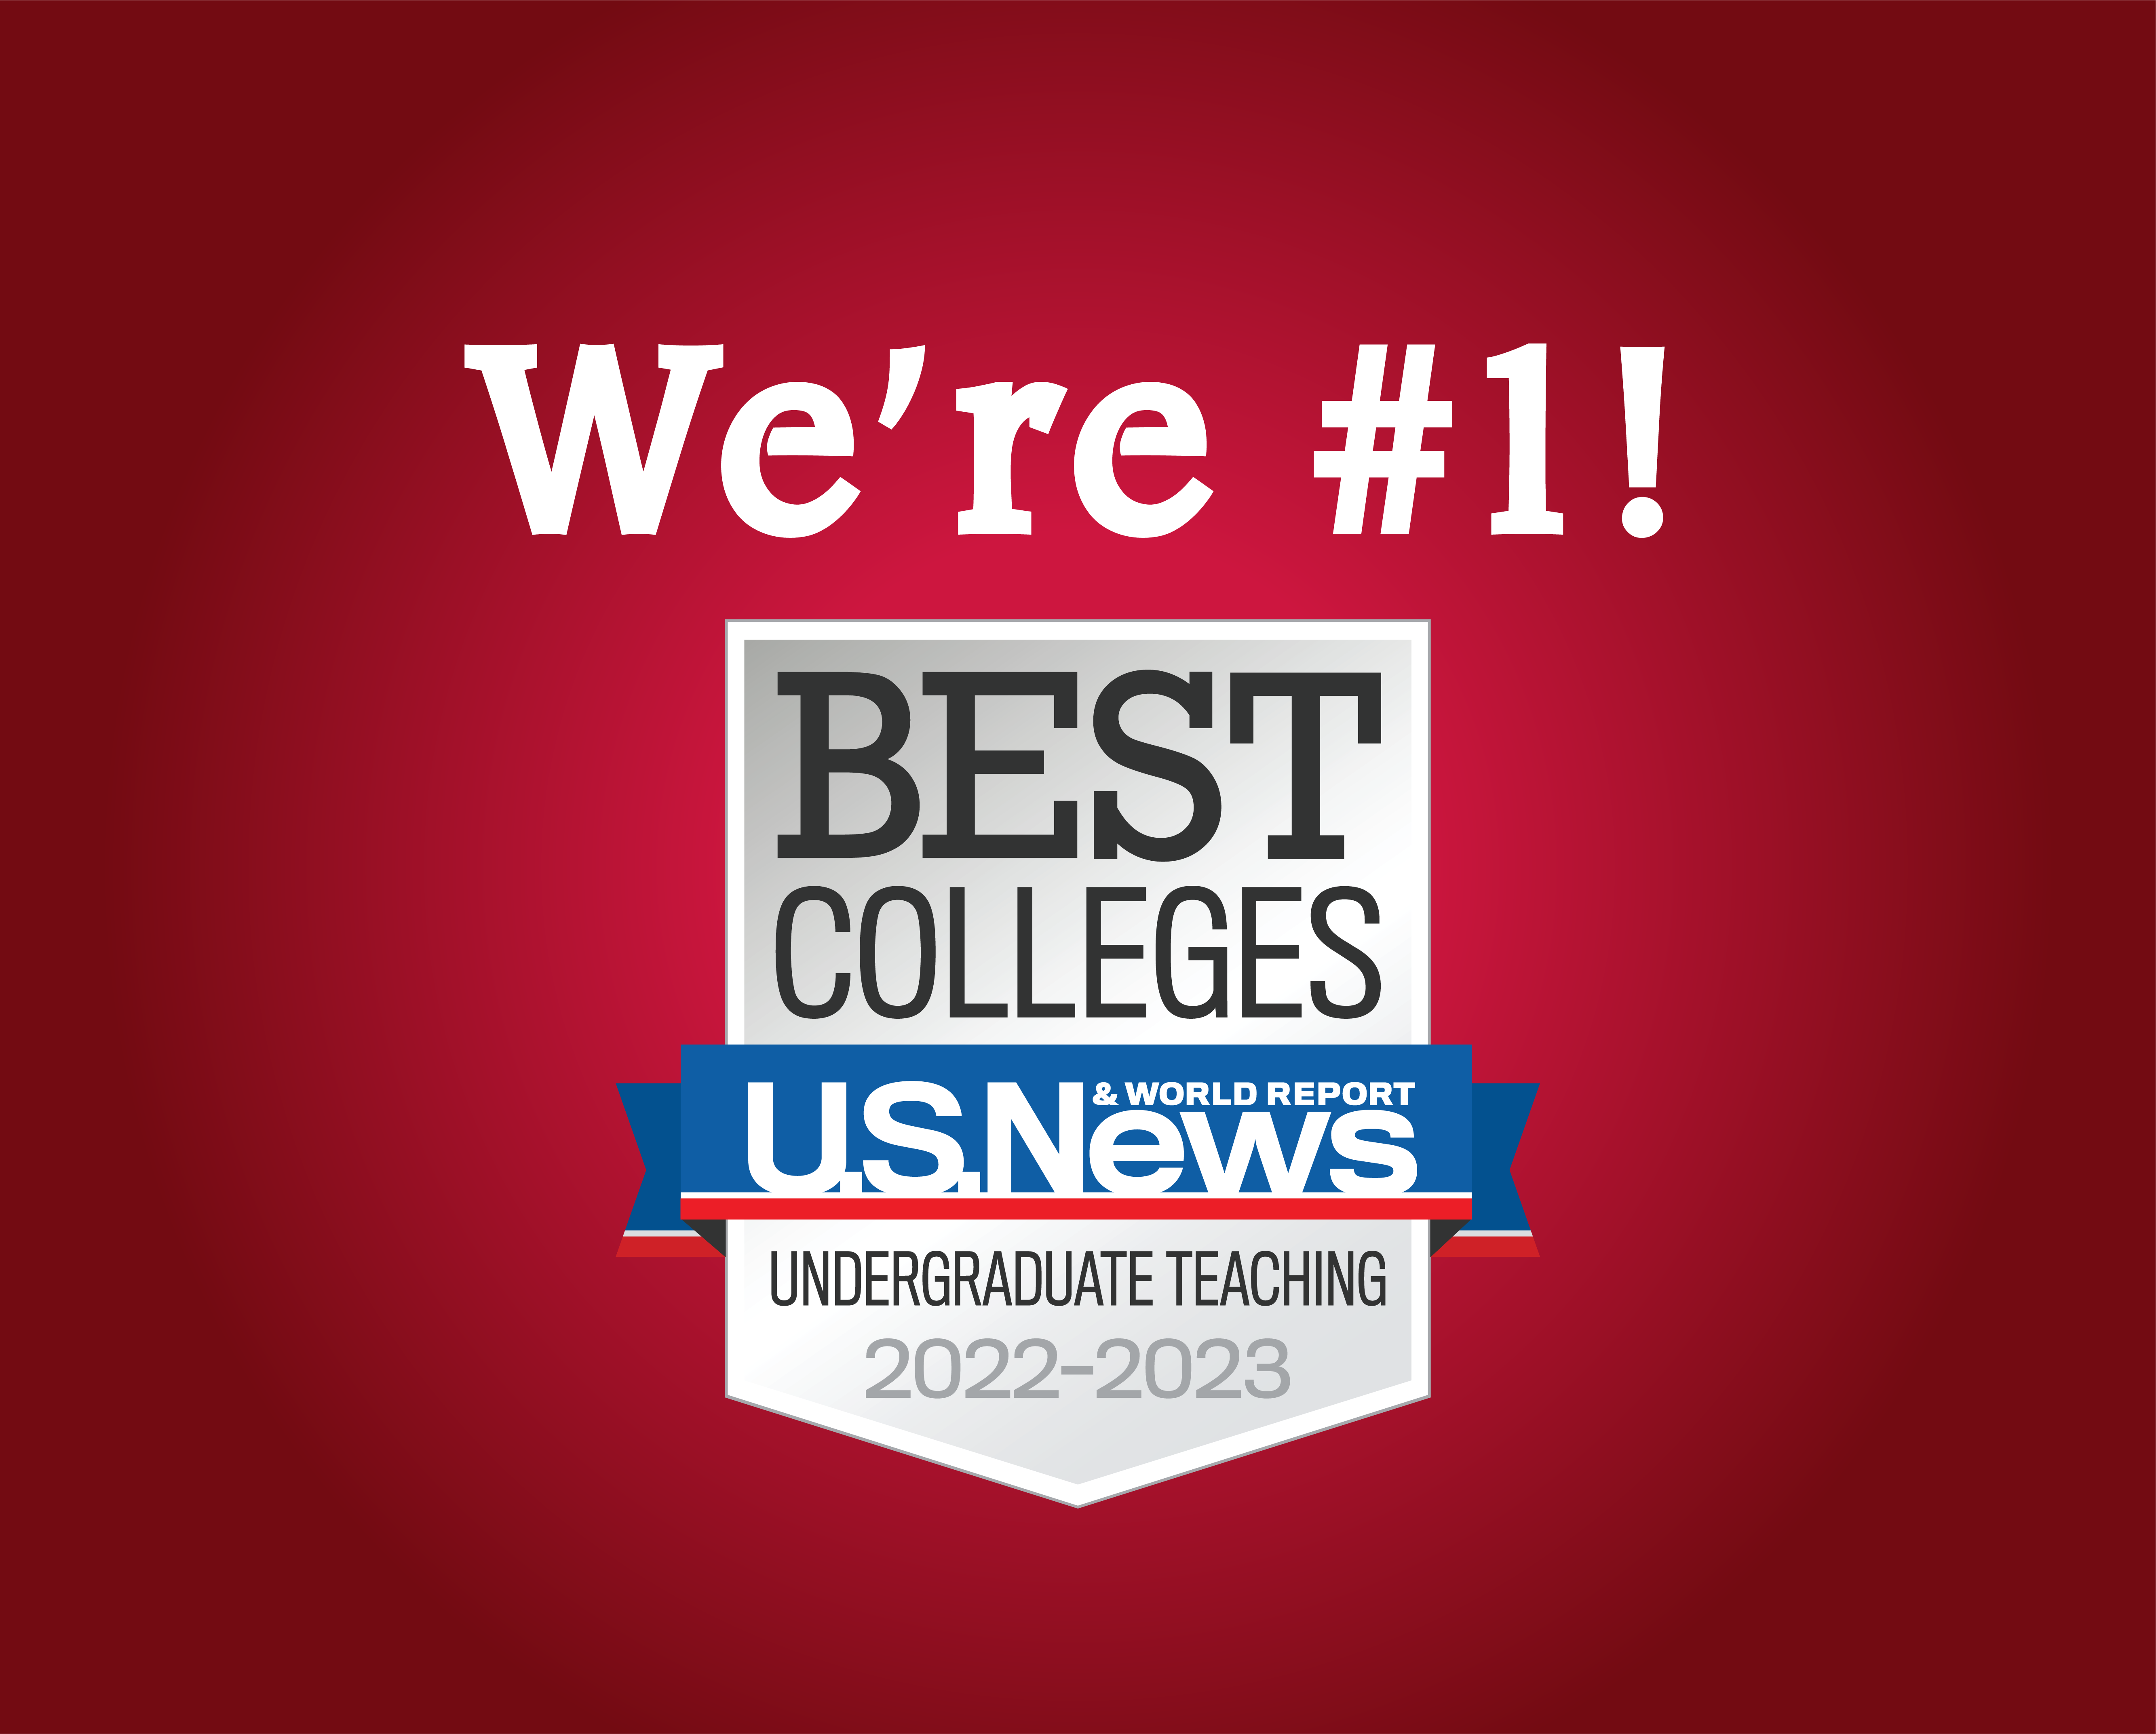 #1 Undergraduate Teaching